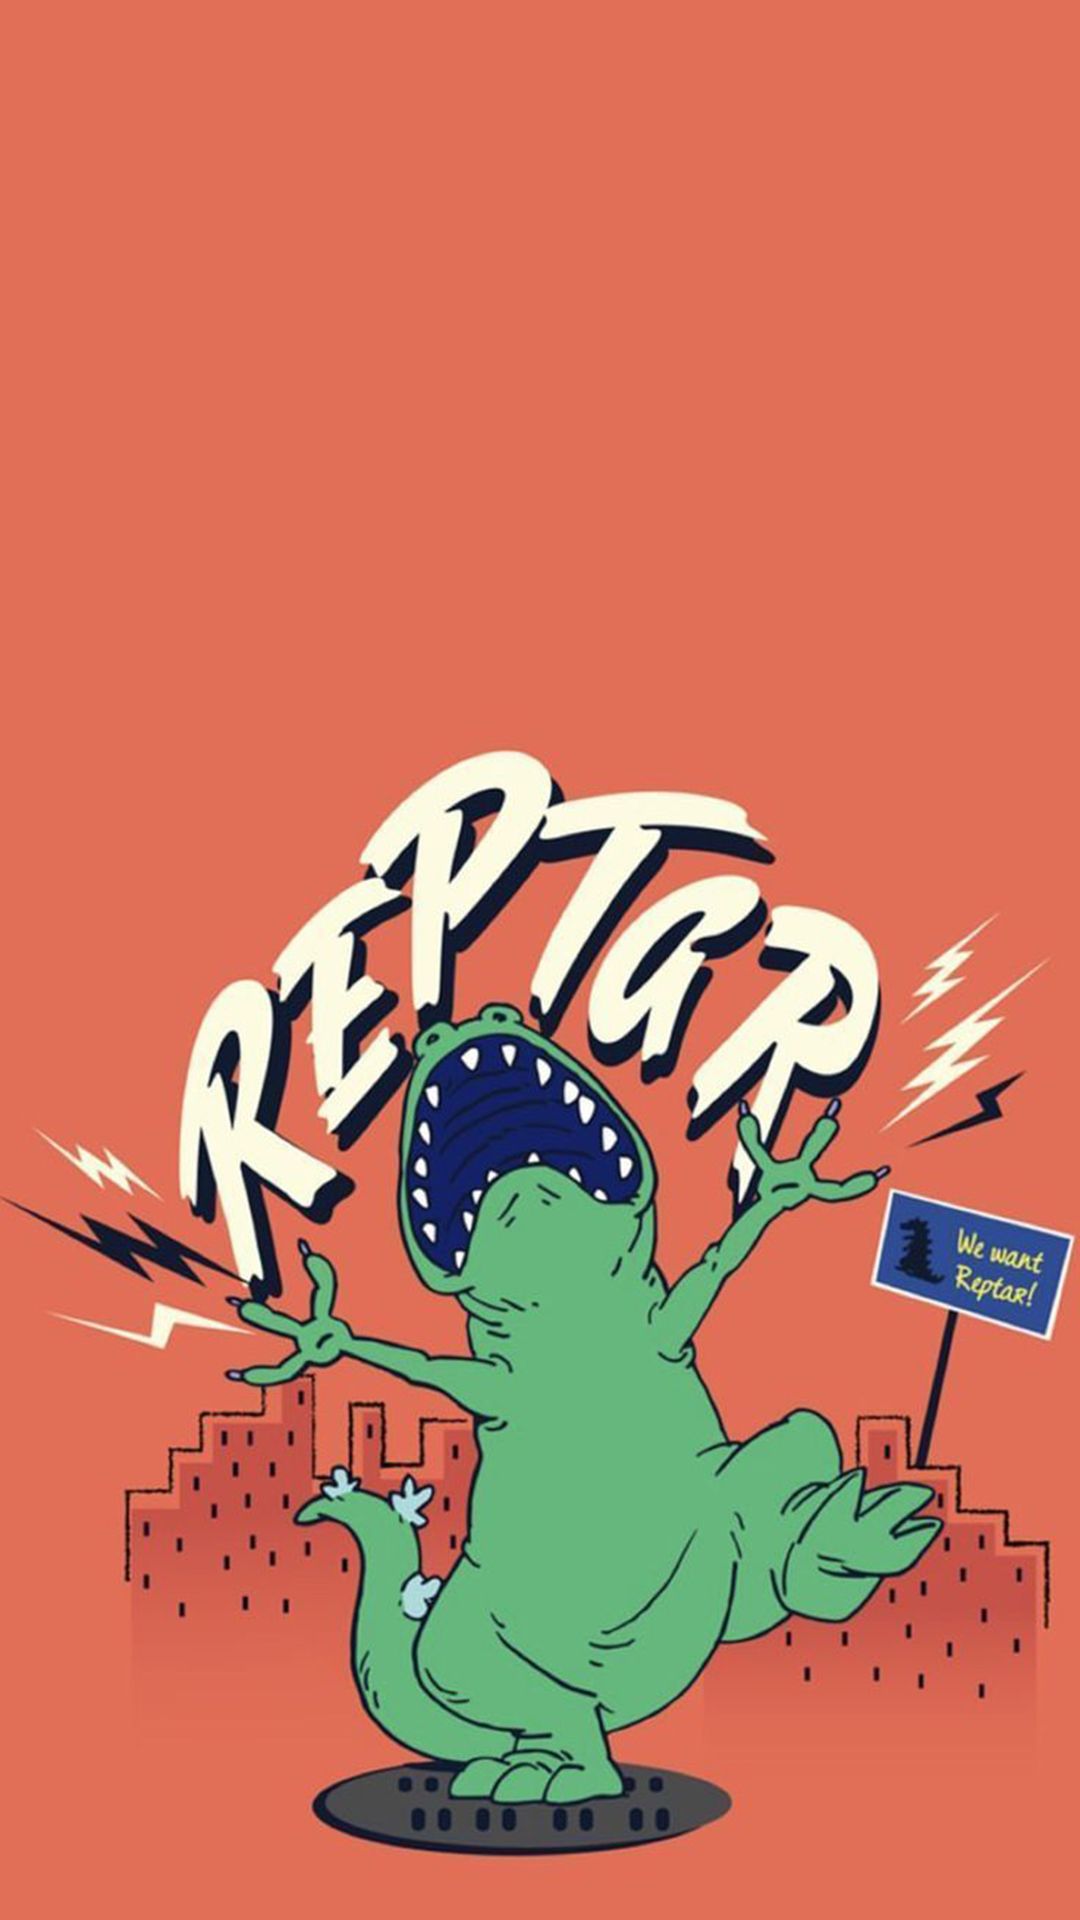 Reptar is the best! - Dinosaur